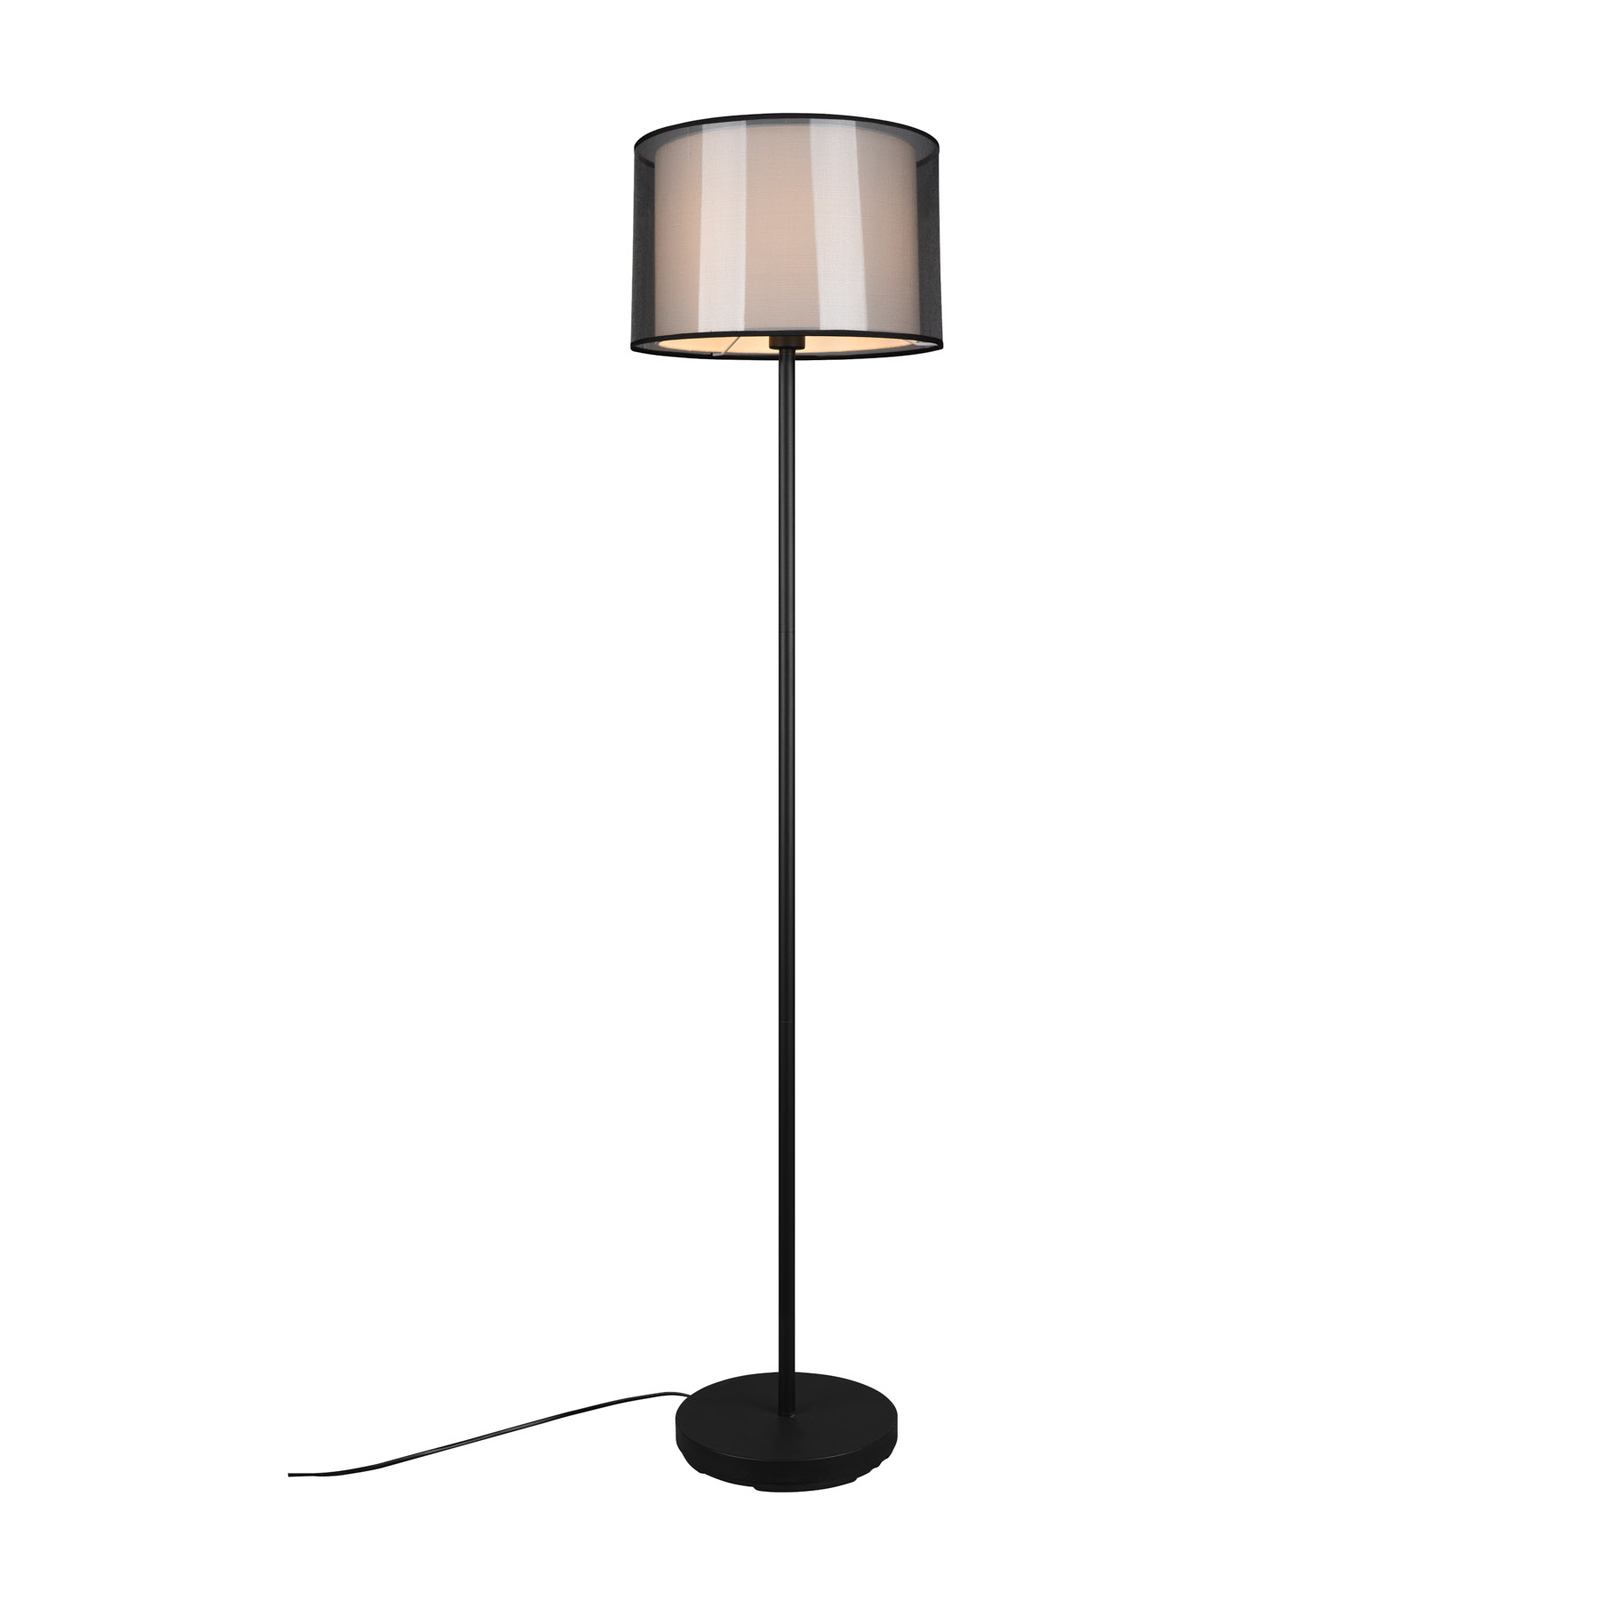 Burton floor lamp with double shade